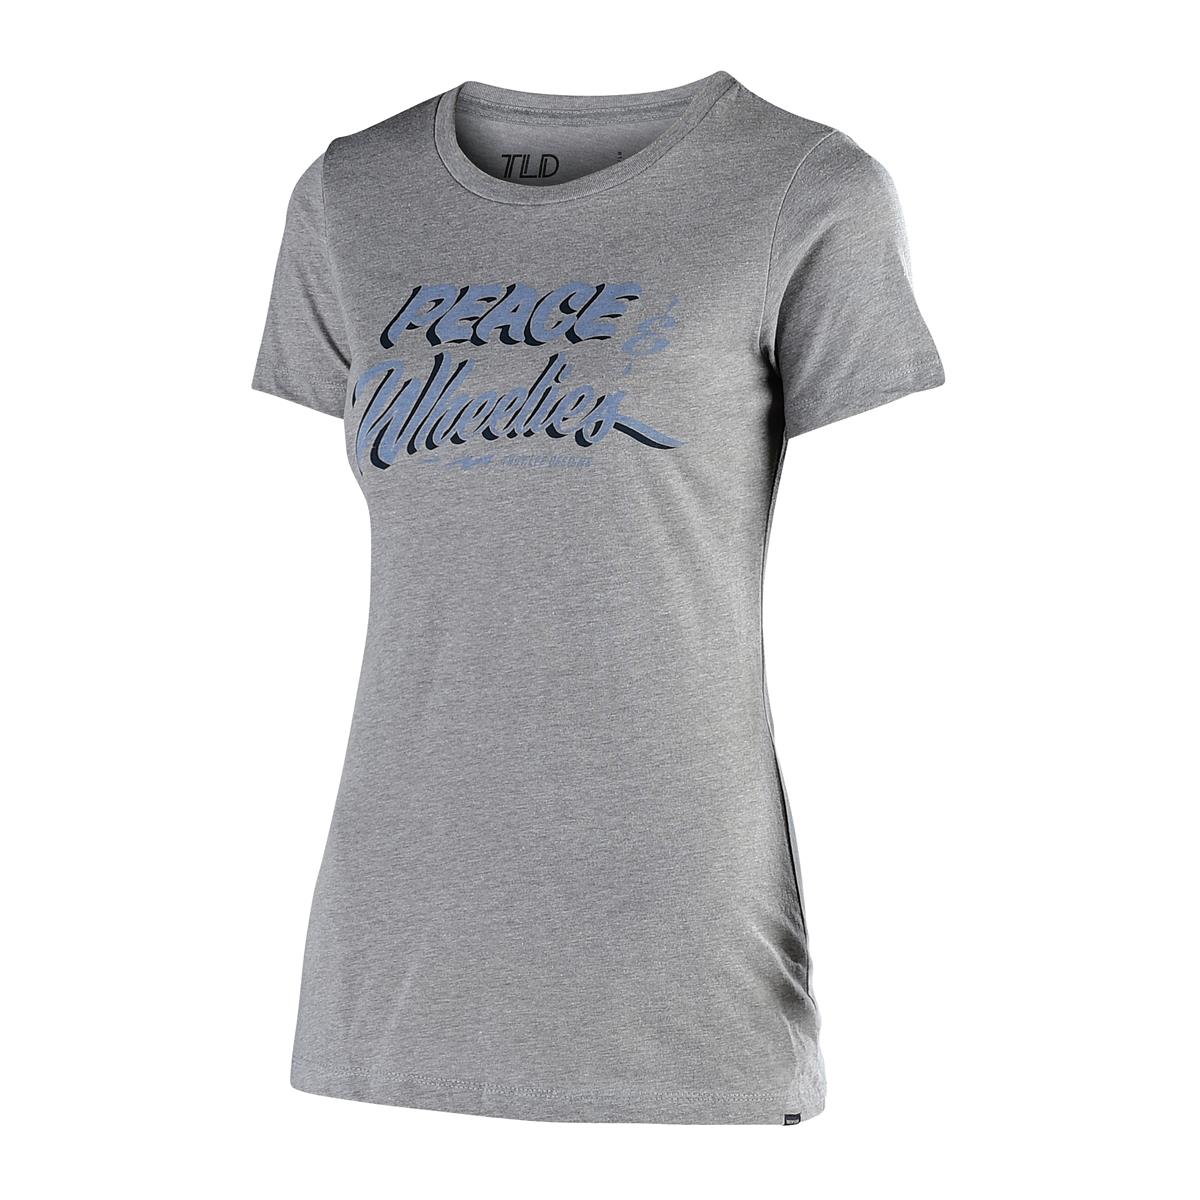 Troy Lee Designs Femme T-Shirt Peace & Wheelies Dark Gris Heather